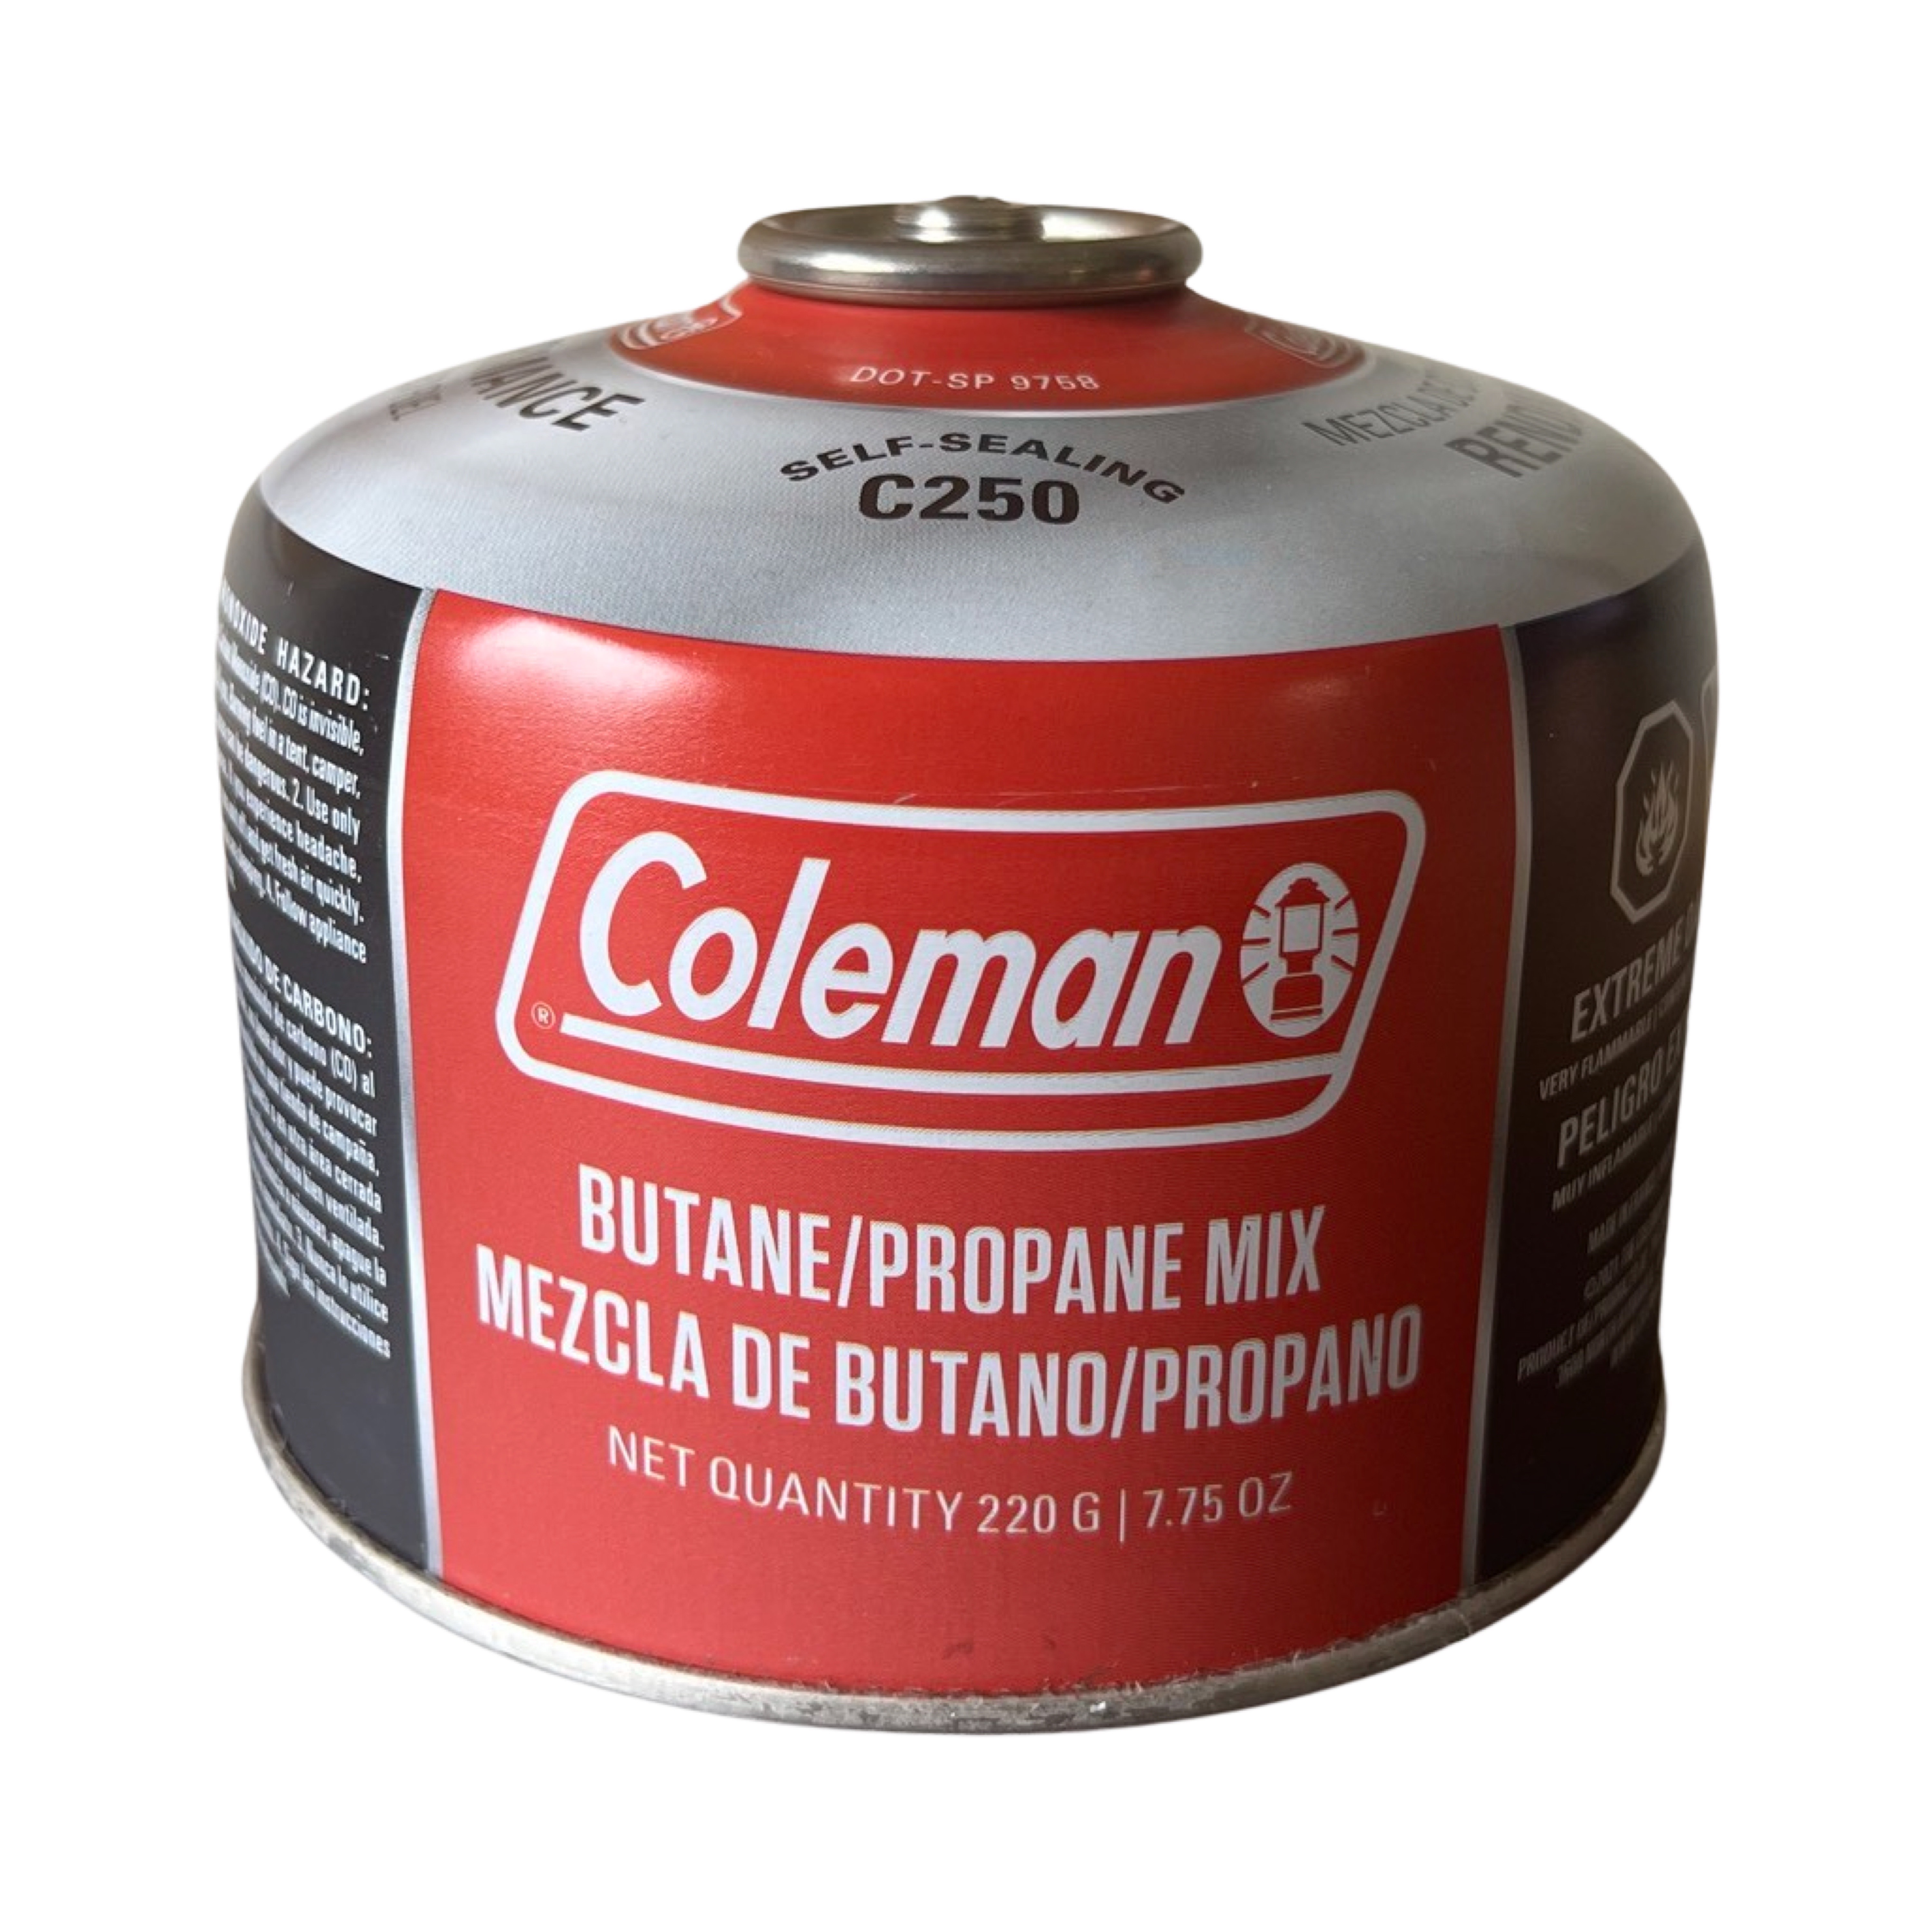 Coleman Butane/Propane Mix Fuel 7.75oz - image 1 of 6